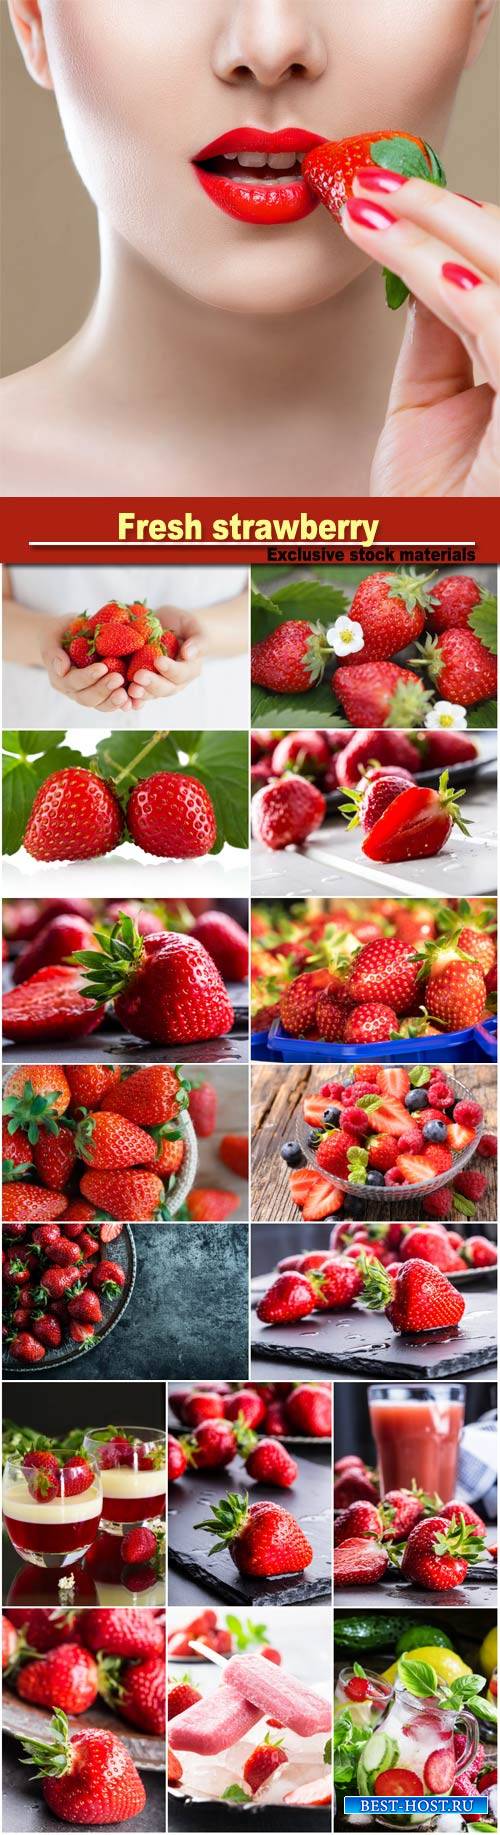 Fresh strawberry, drink with strawberry, ice cream